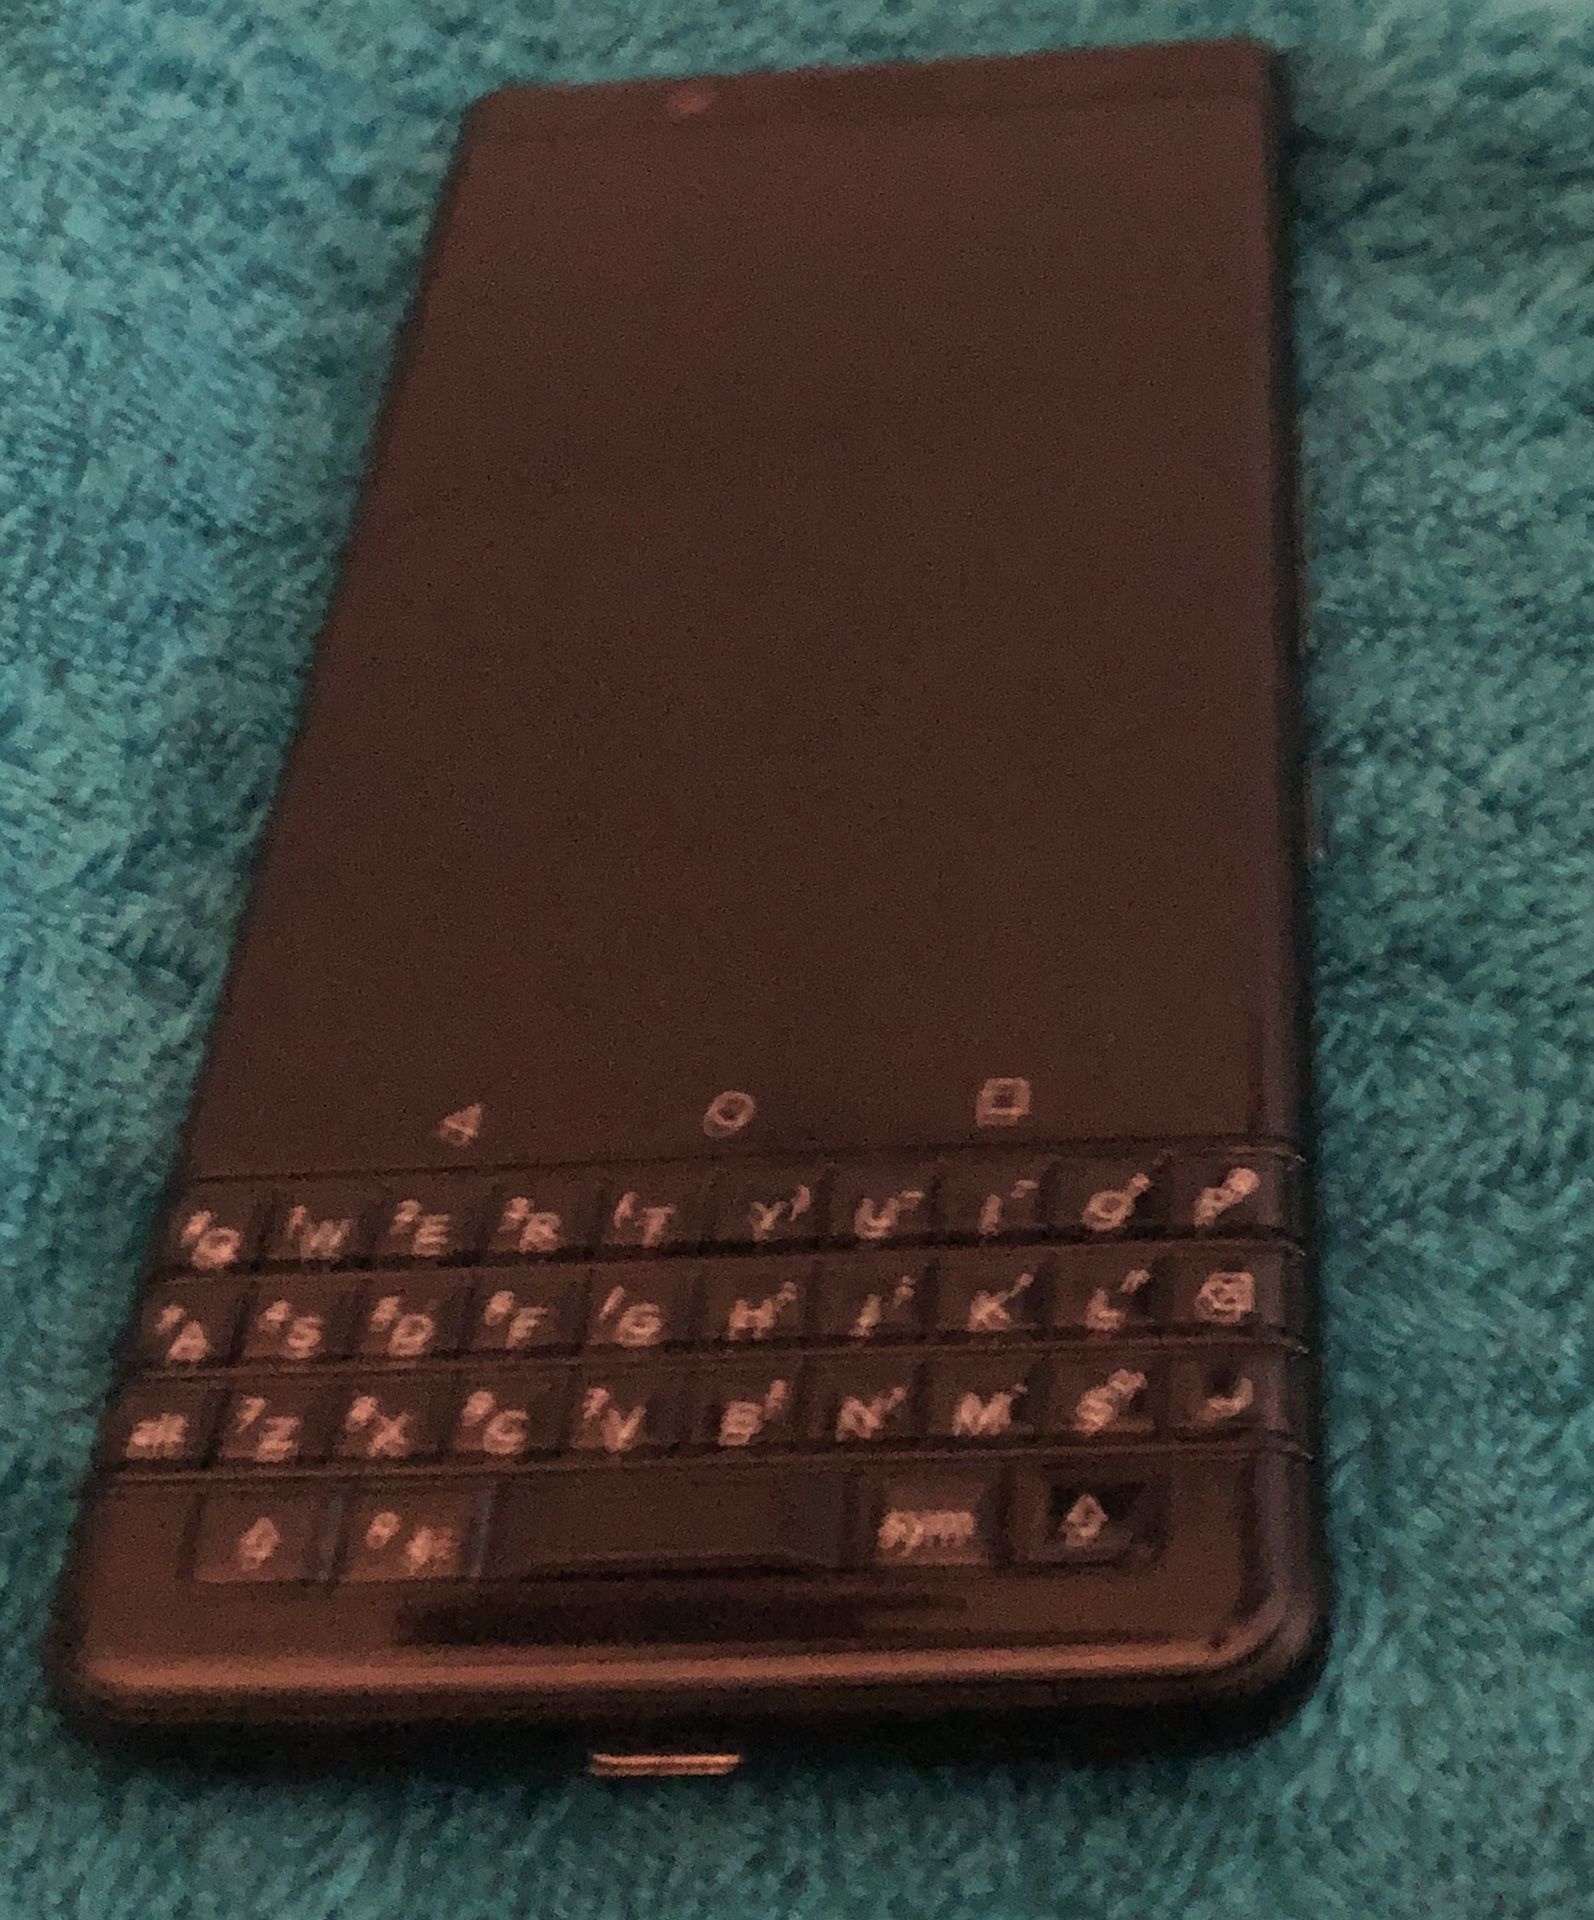 Blackberry (Keyone) AT&T Brand New